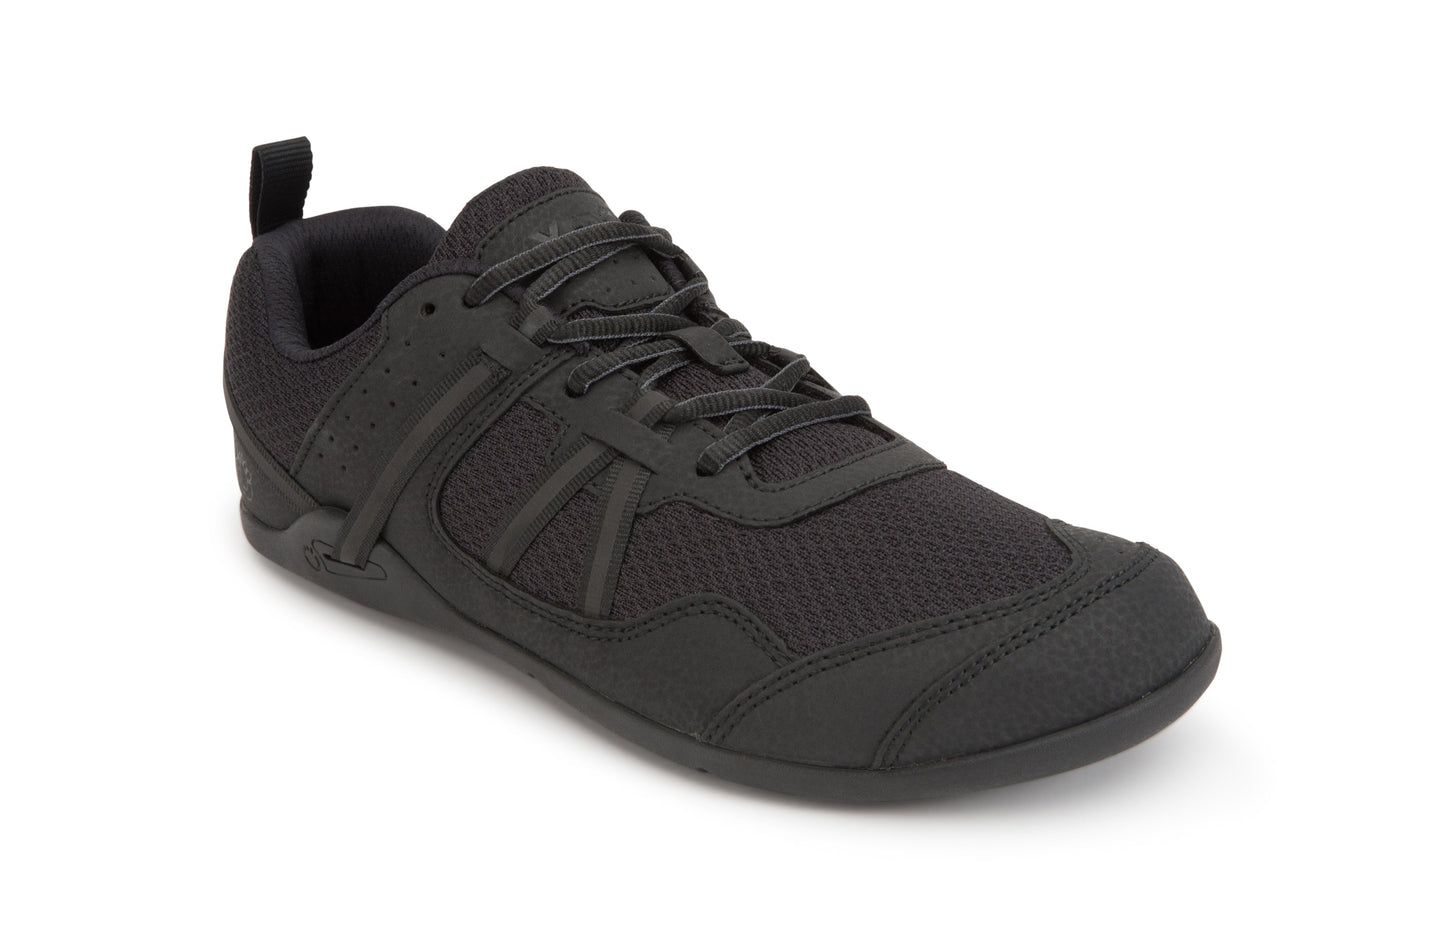 Xero Shoes Prio Womens barfods træningssko til kvinder i farven black, vinklet